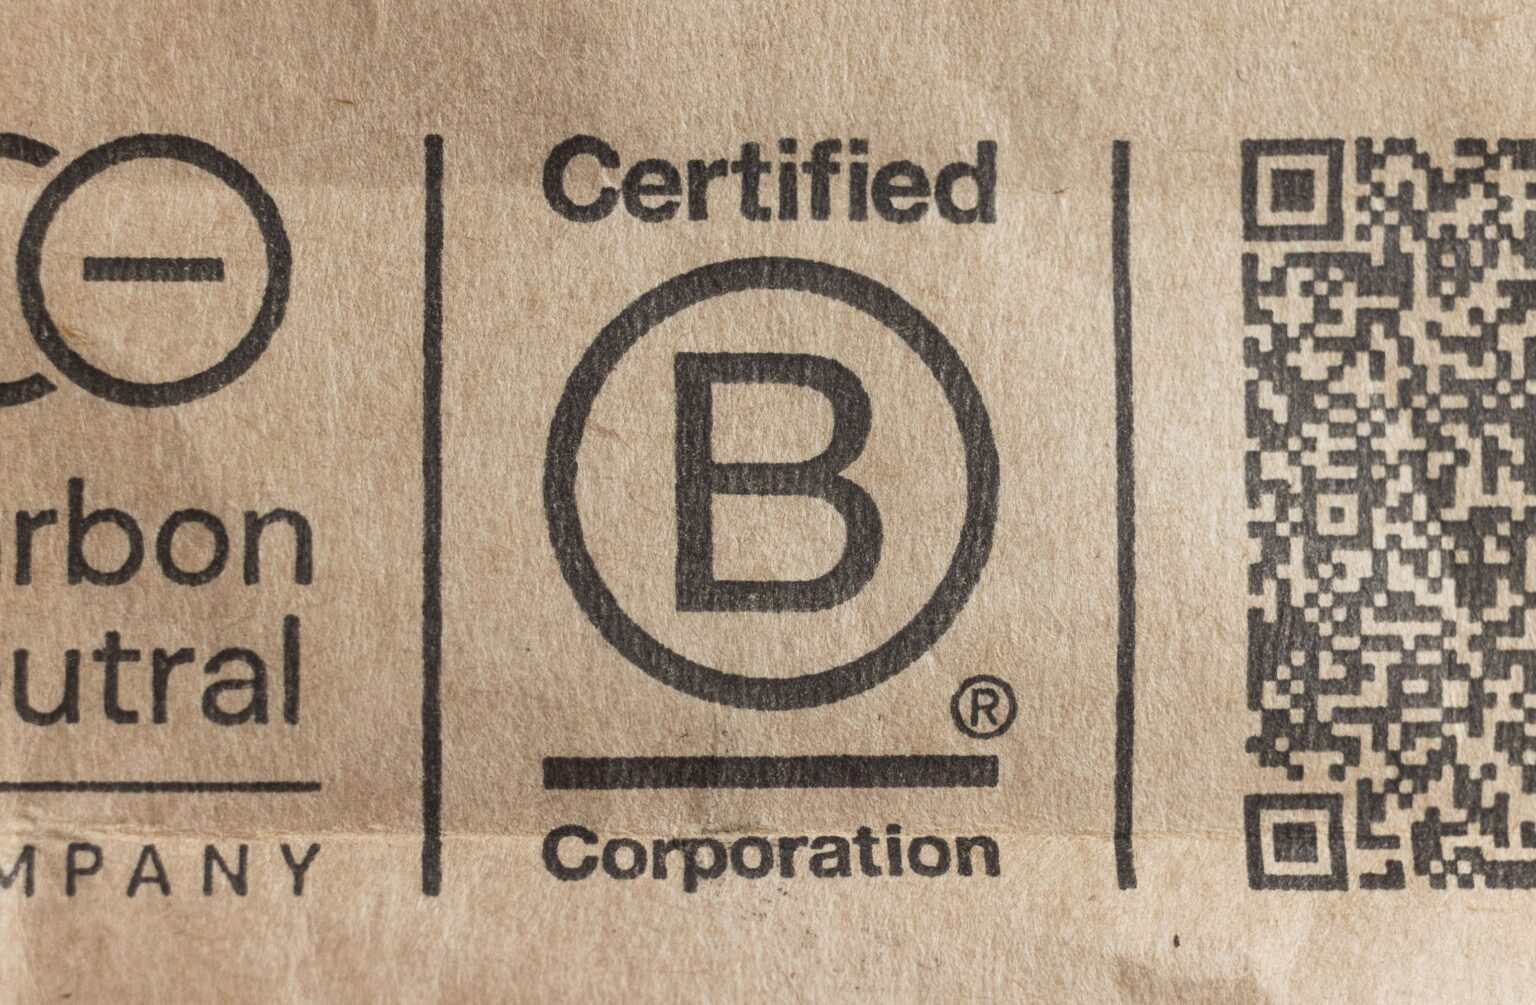 B Corporations